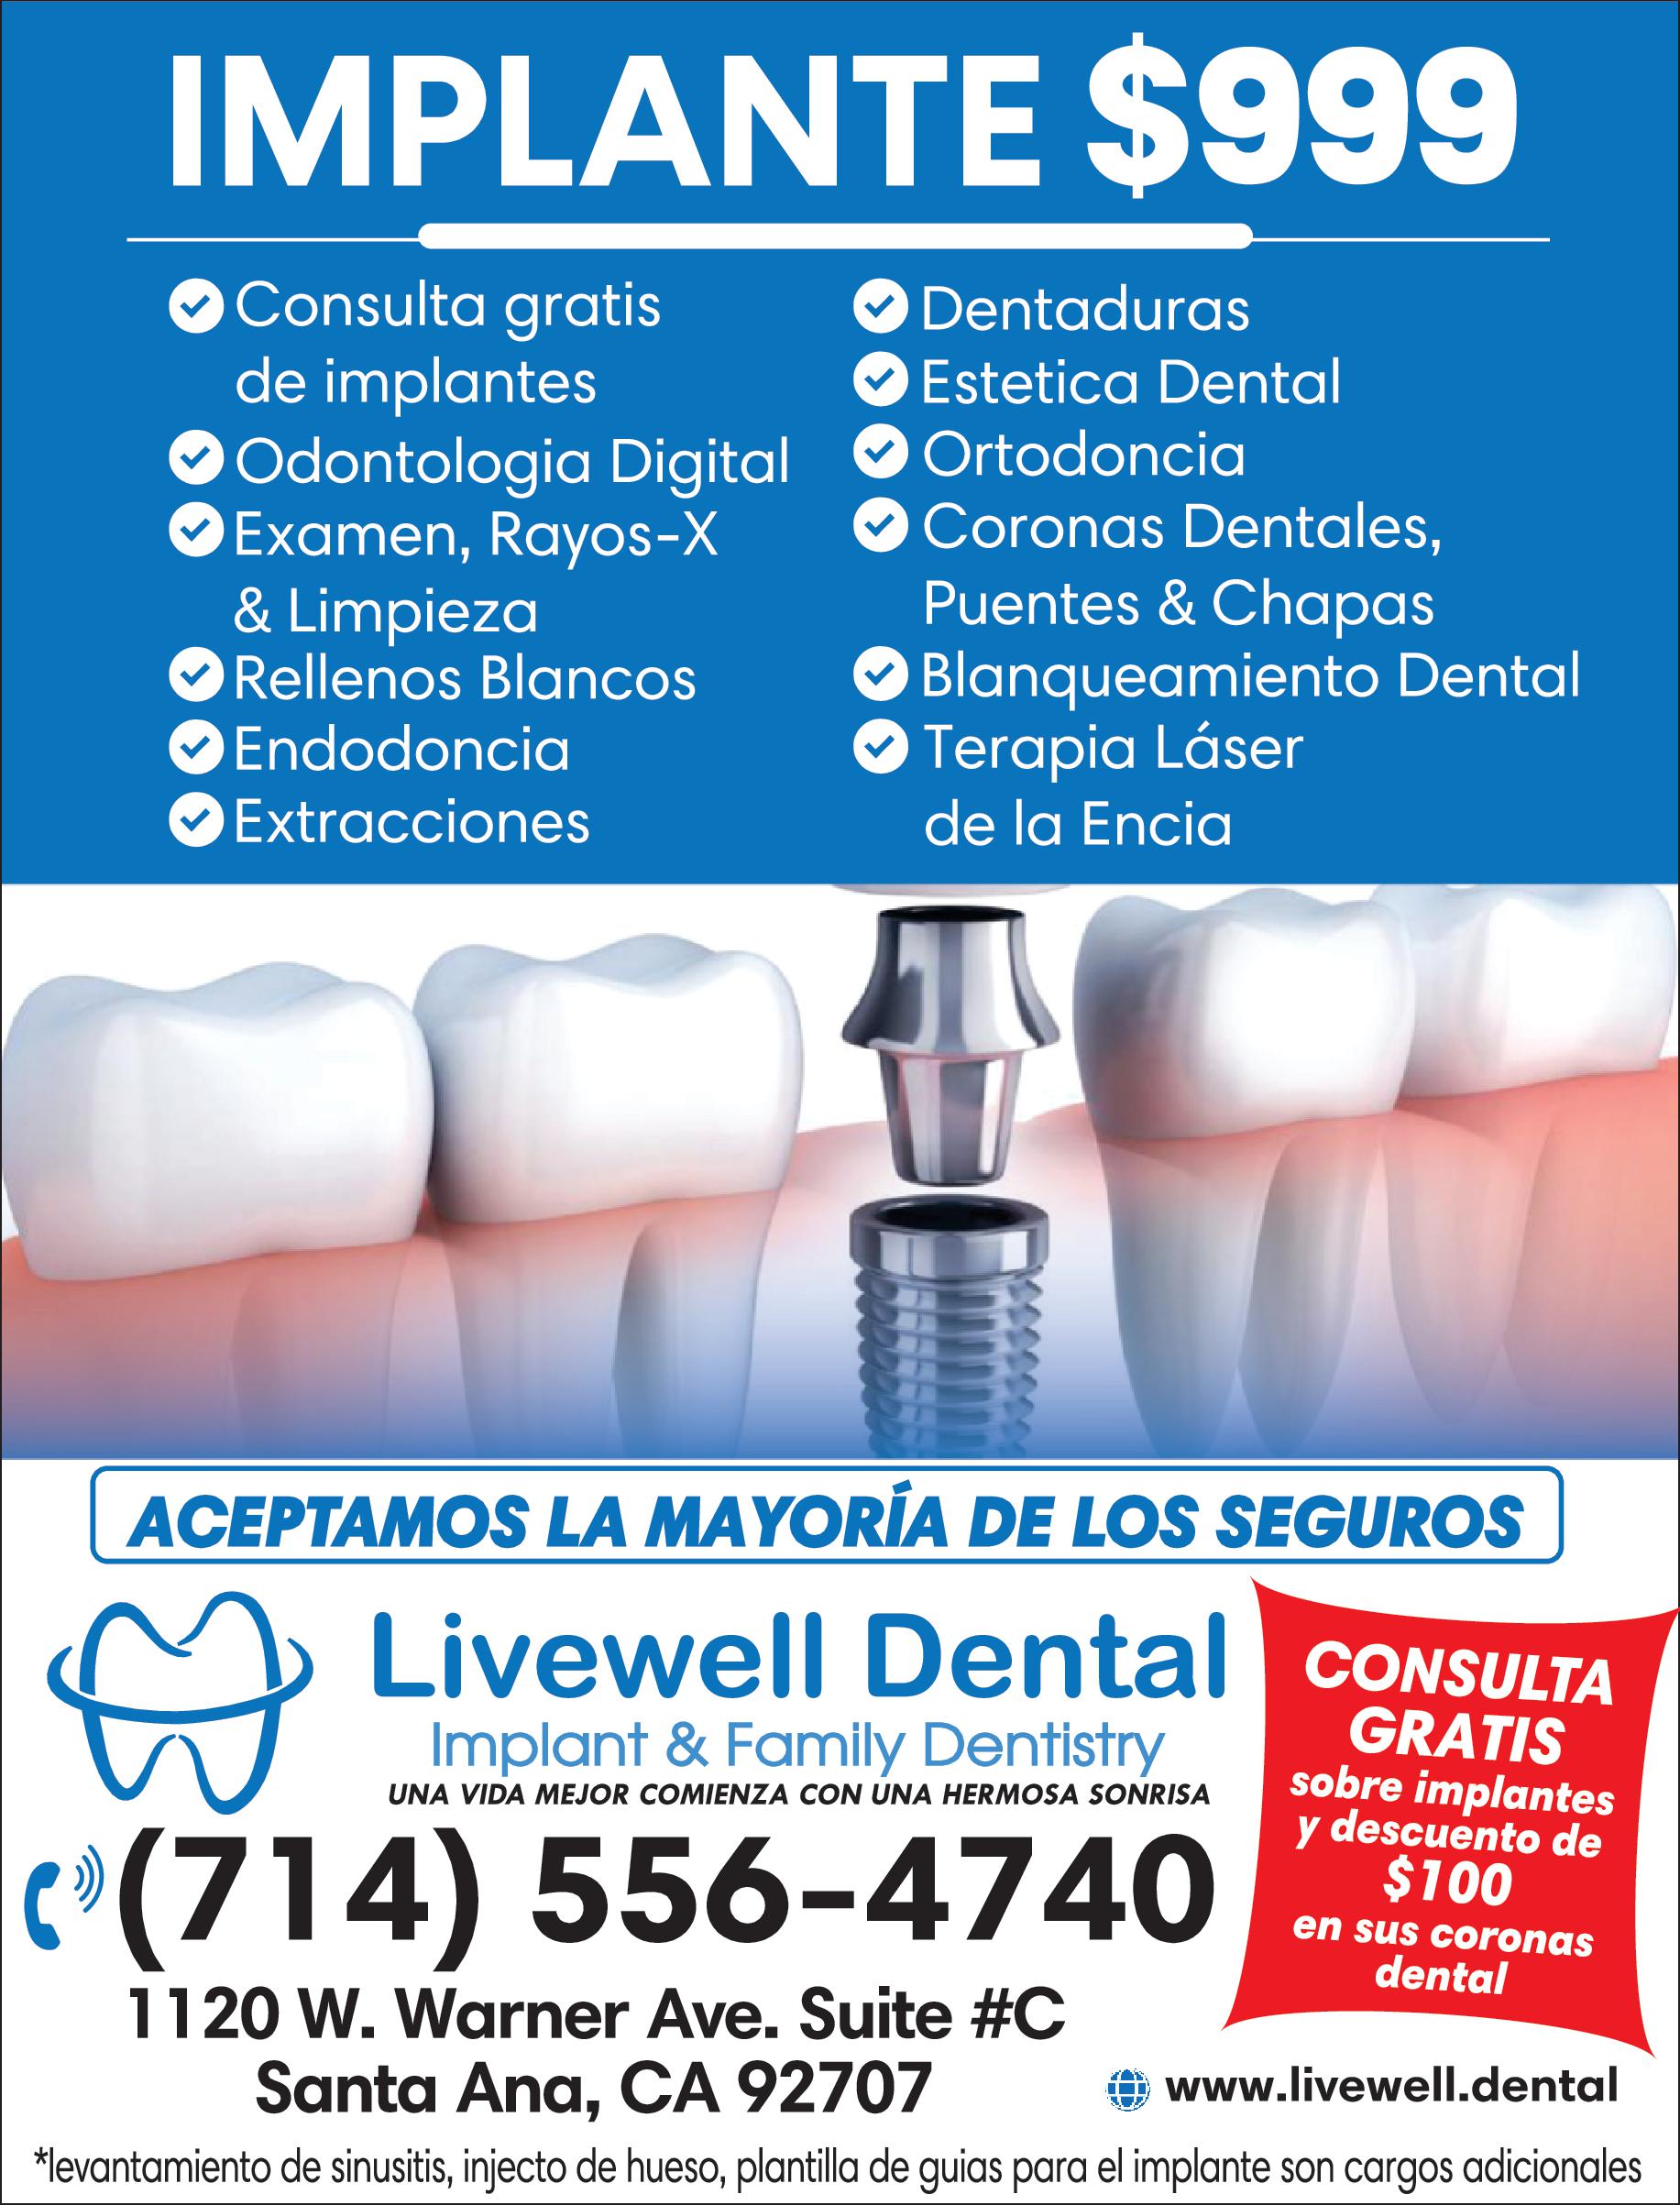 Livewell Dental